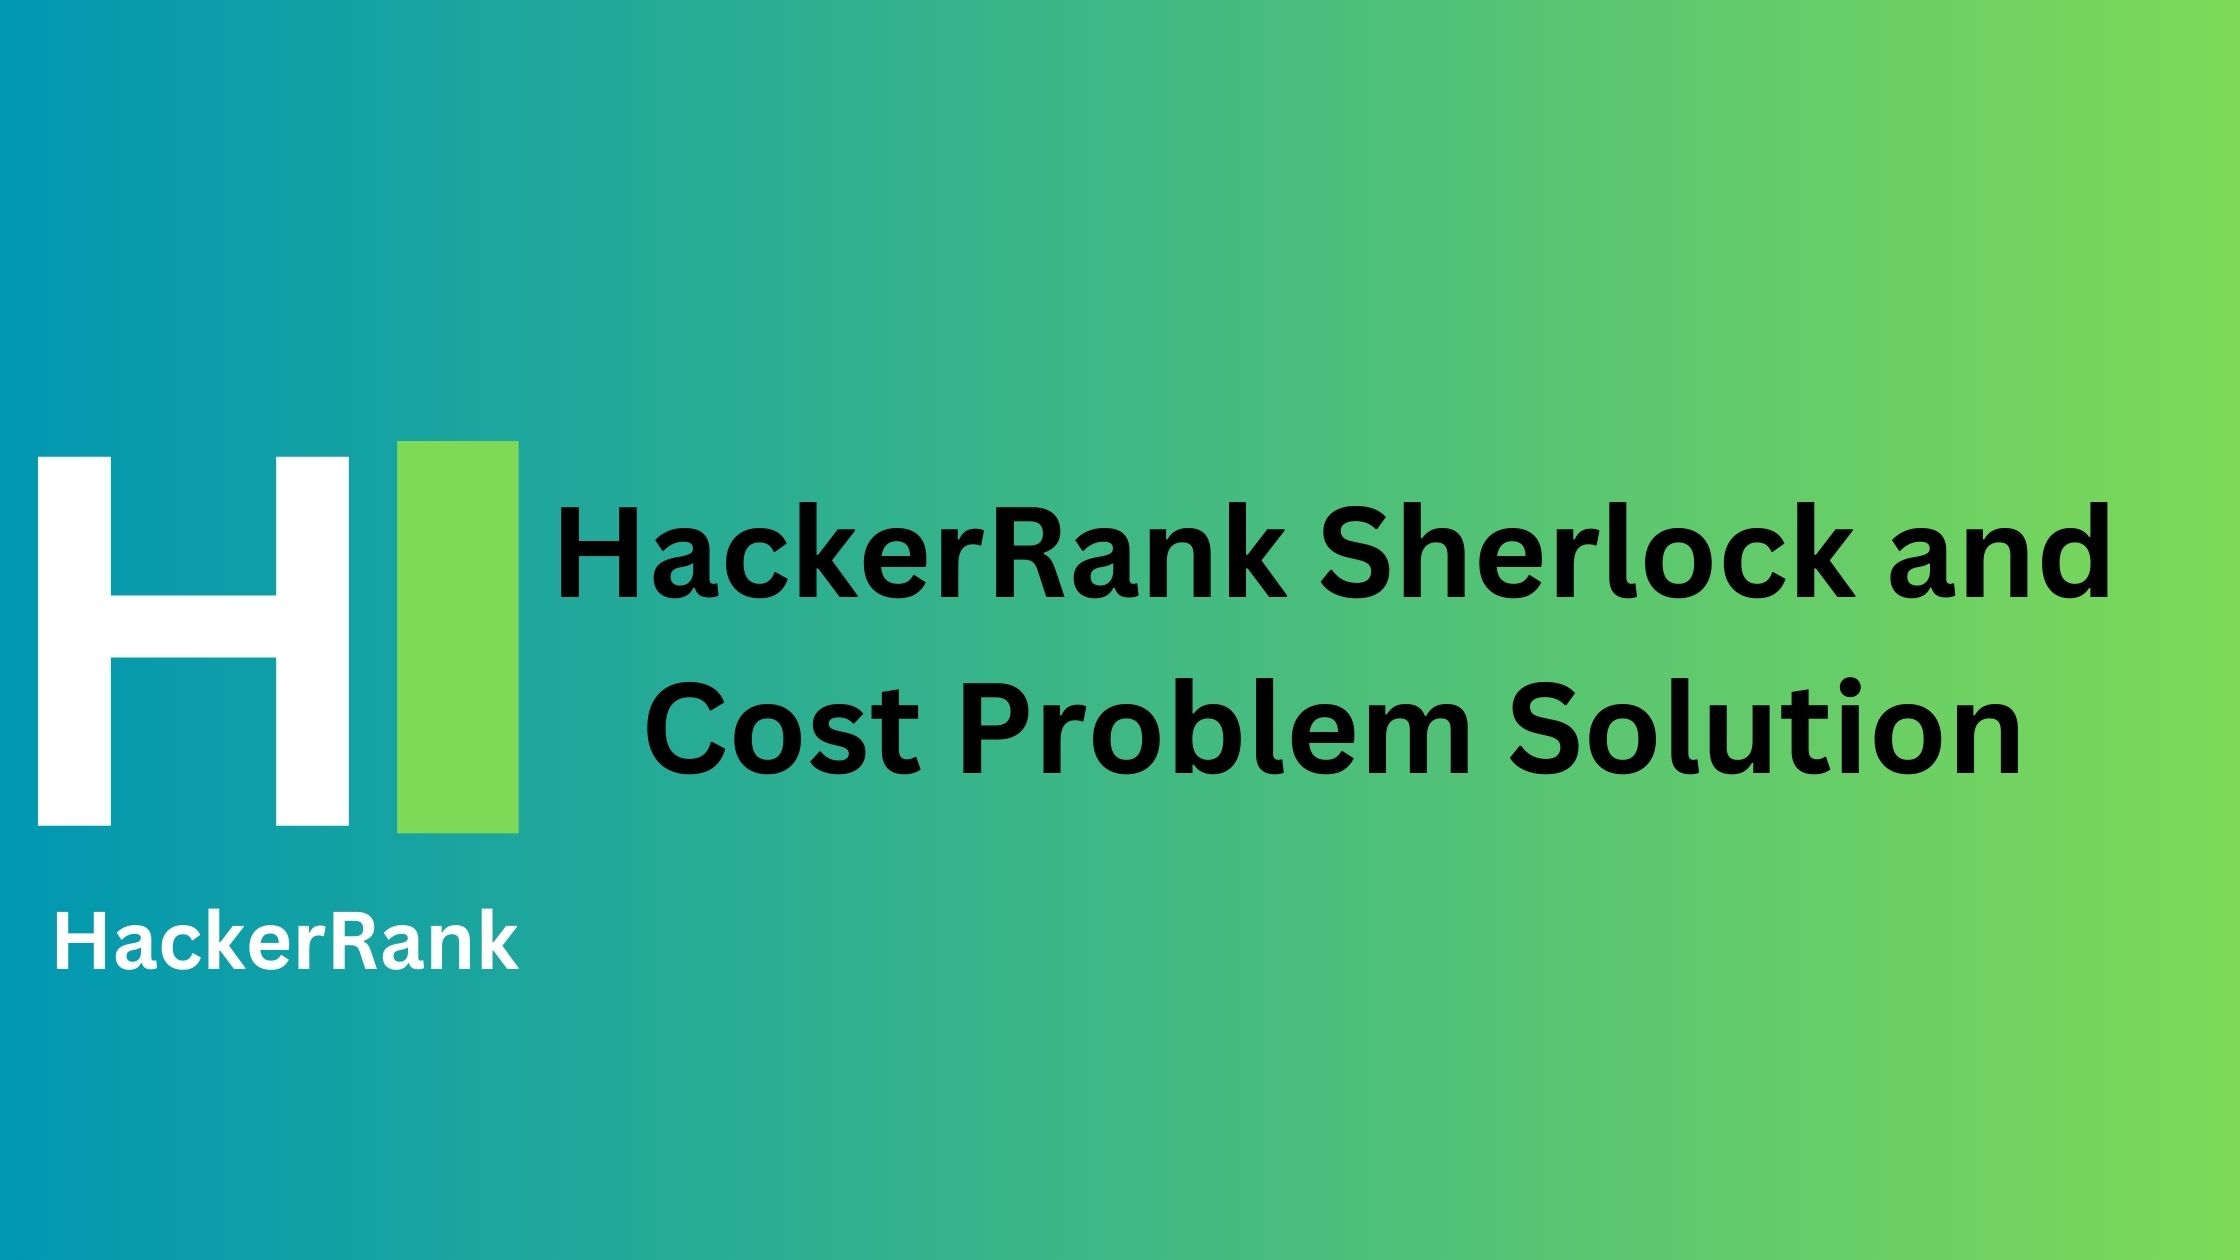 HackerRank Sherlock and Cost Problem Solution